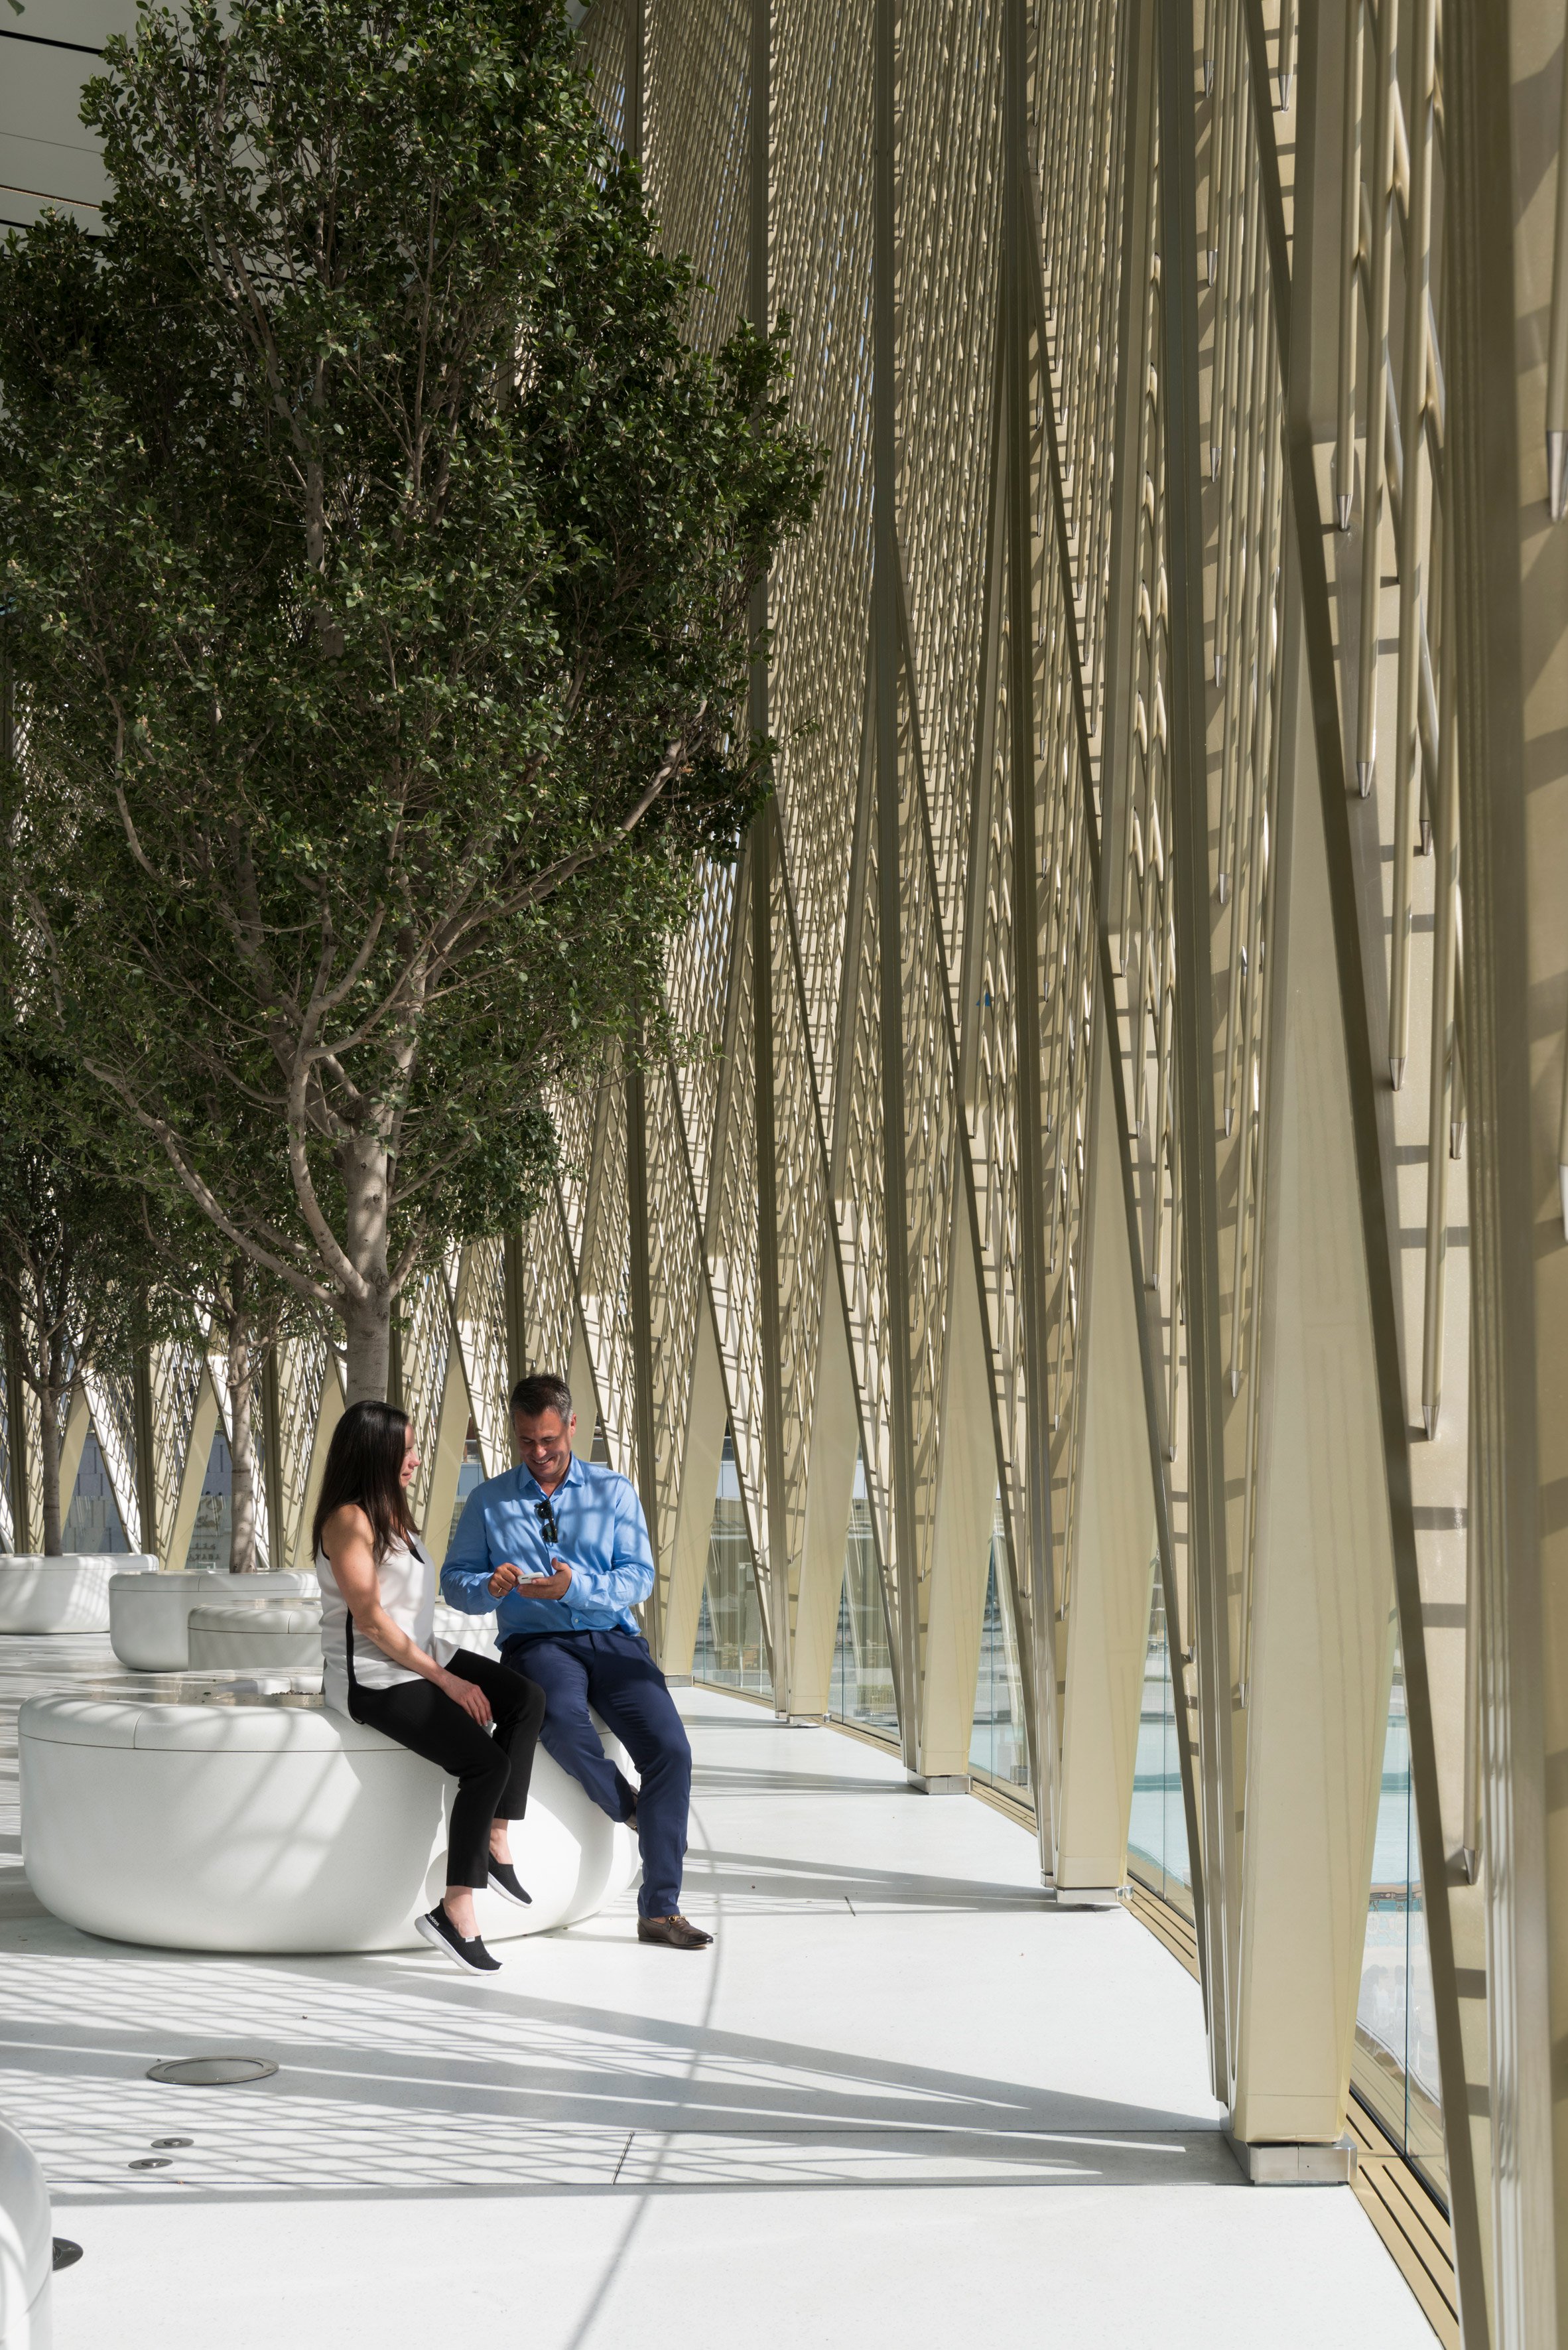 Studio Foster + Partners Adds Carbon-Fibre Covers to Dubai Apple Store